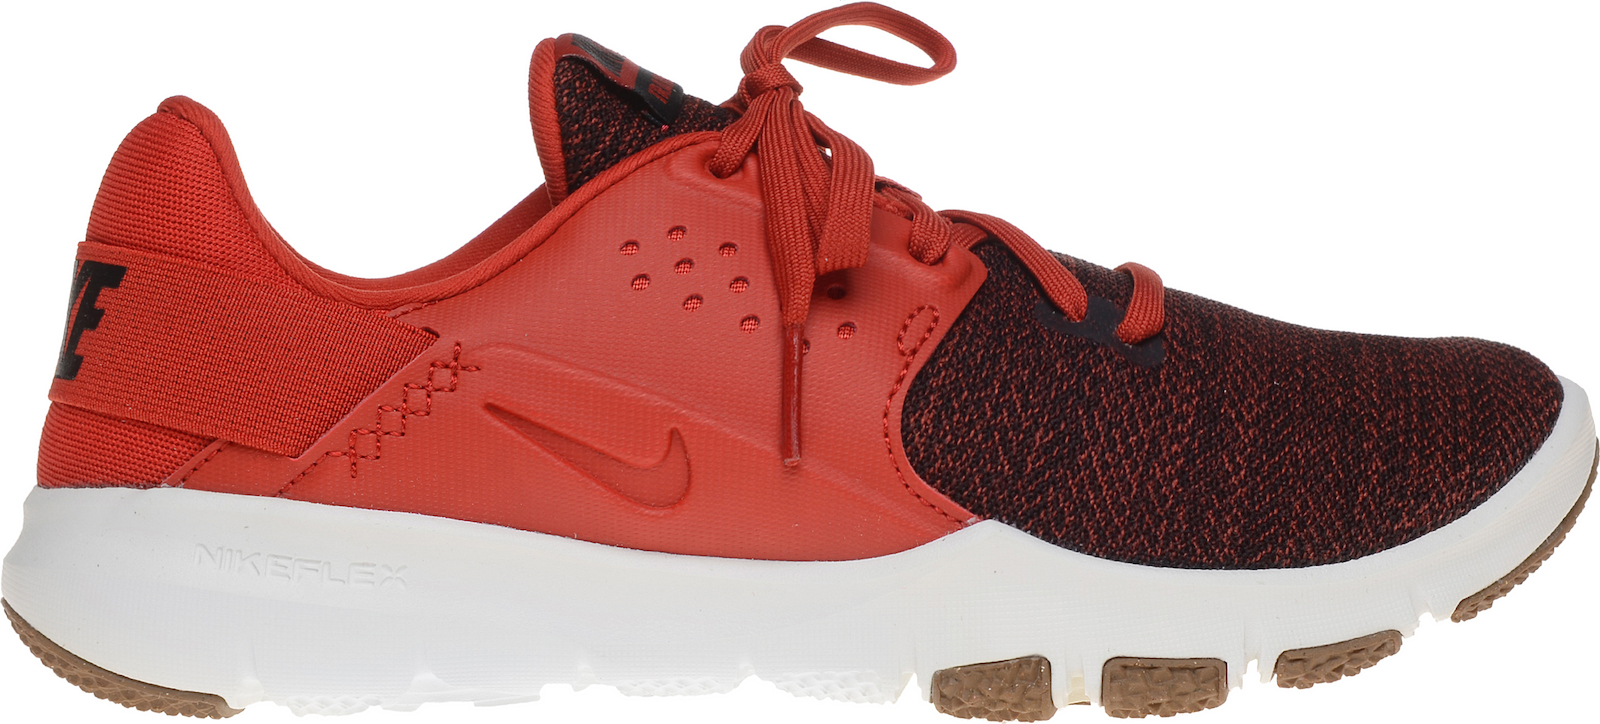 Nike Control TR3 AJ5911-601 Ανδρικά Παπούτσια Running Πορτοκαλί | Skroutz.gr